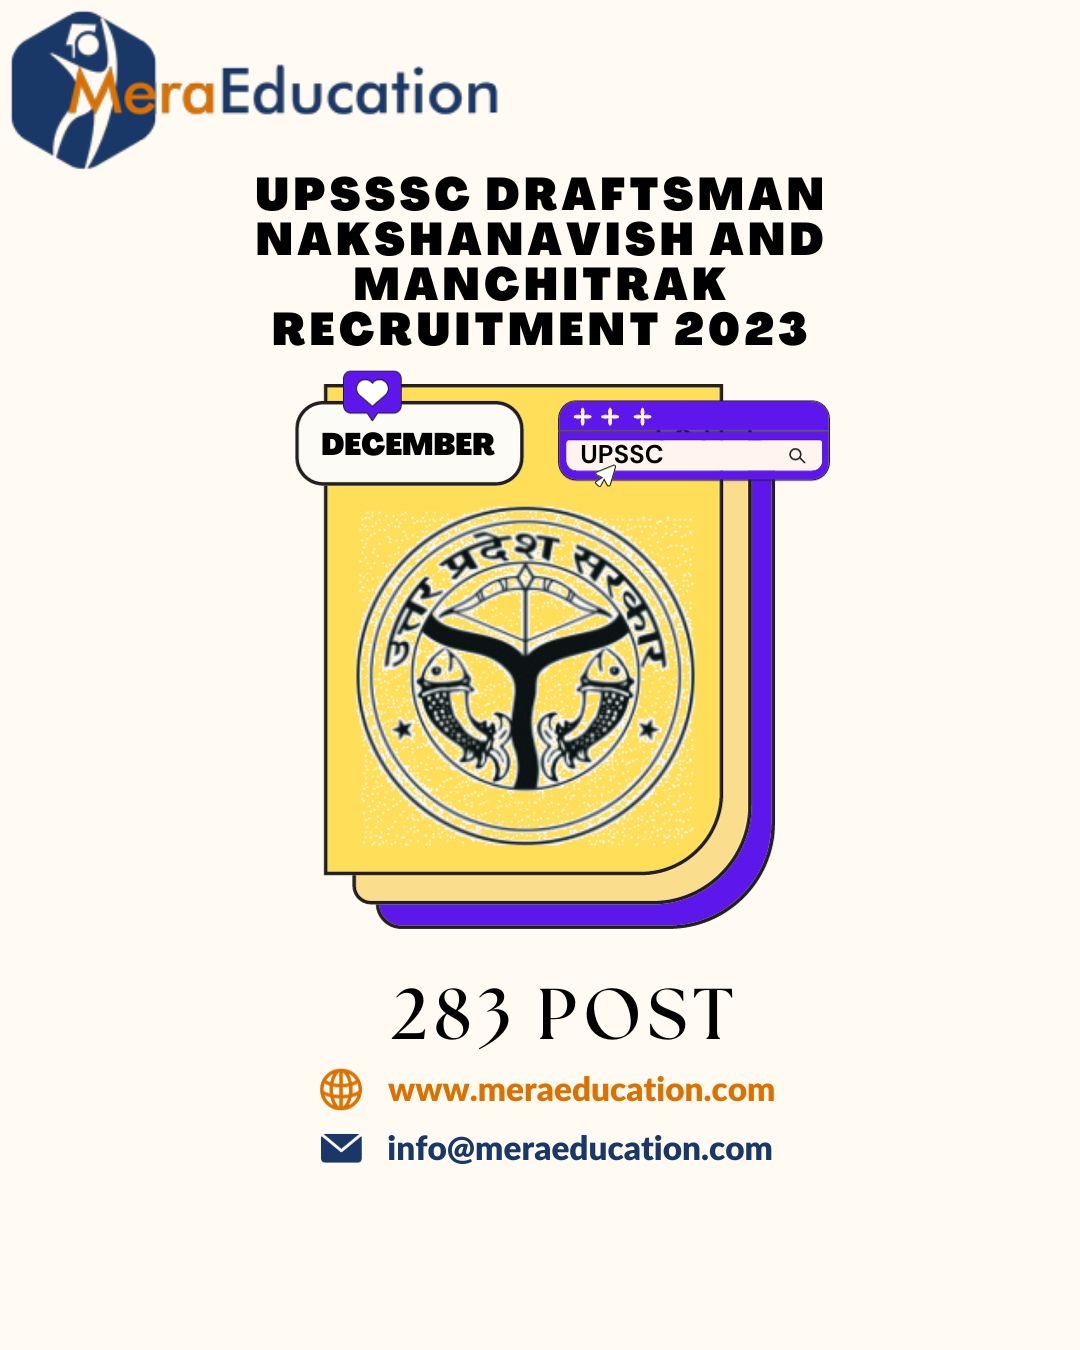 UPSSSC Nakshanveesh / Manchitrak Recruitment